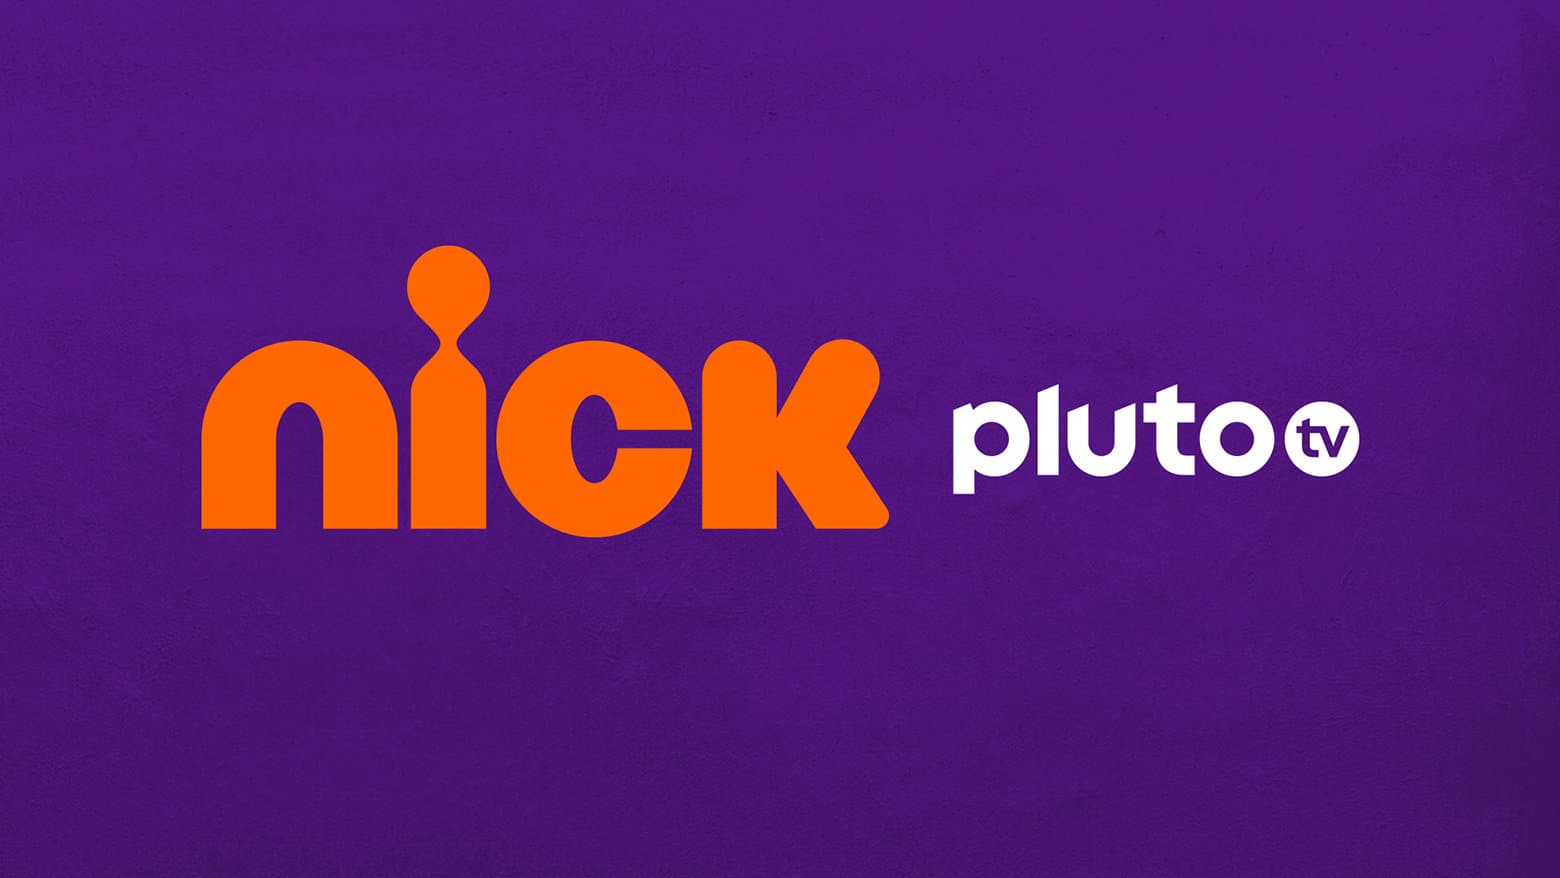 Pluto Tv Integriert Kostenlos Die Kindersender Nick Jr Pluto Tv Nick Pluto Tv Und Nick Rewind 4k Filme